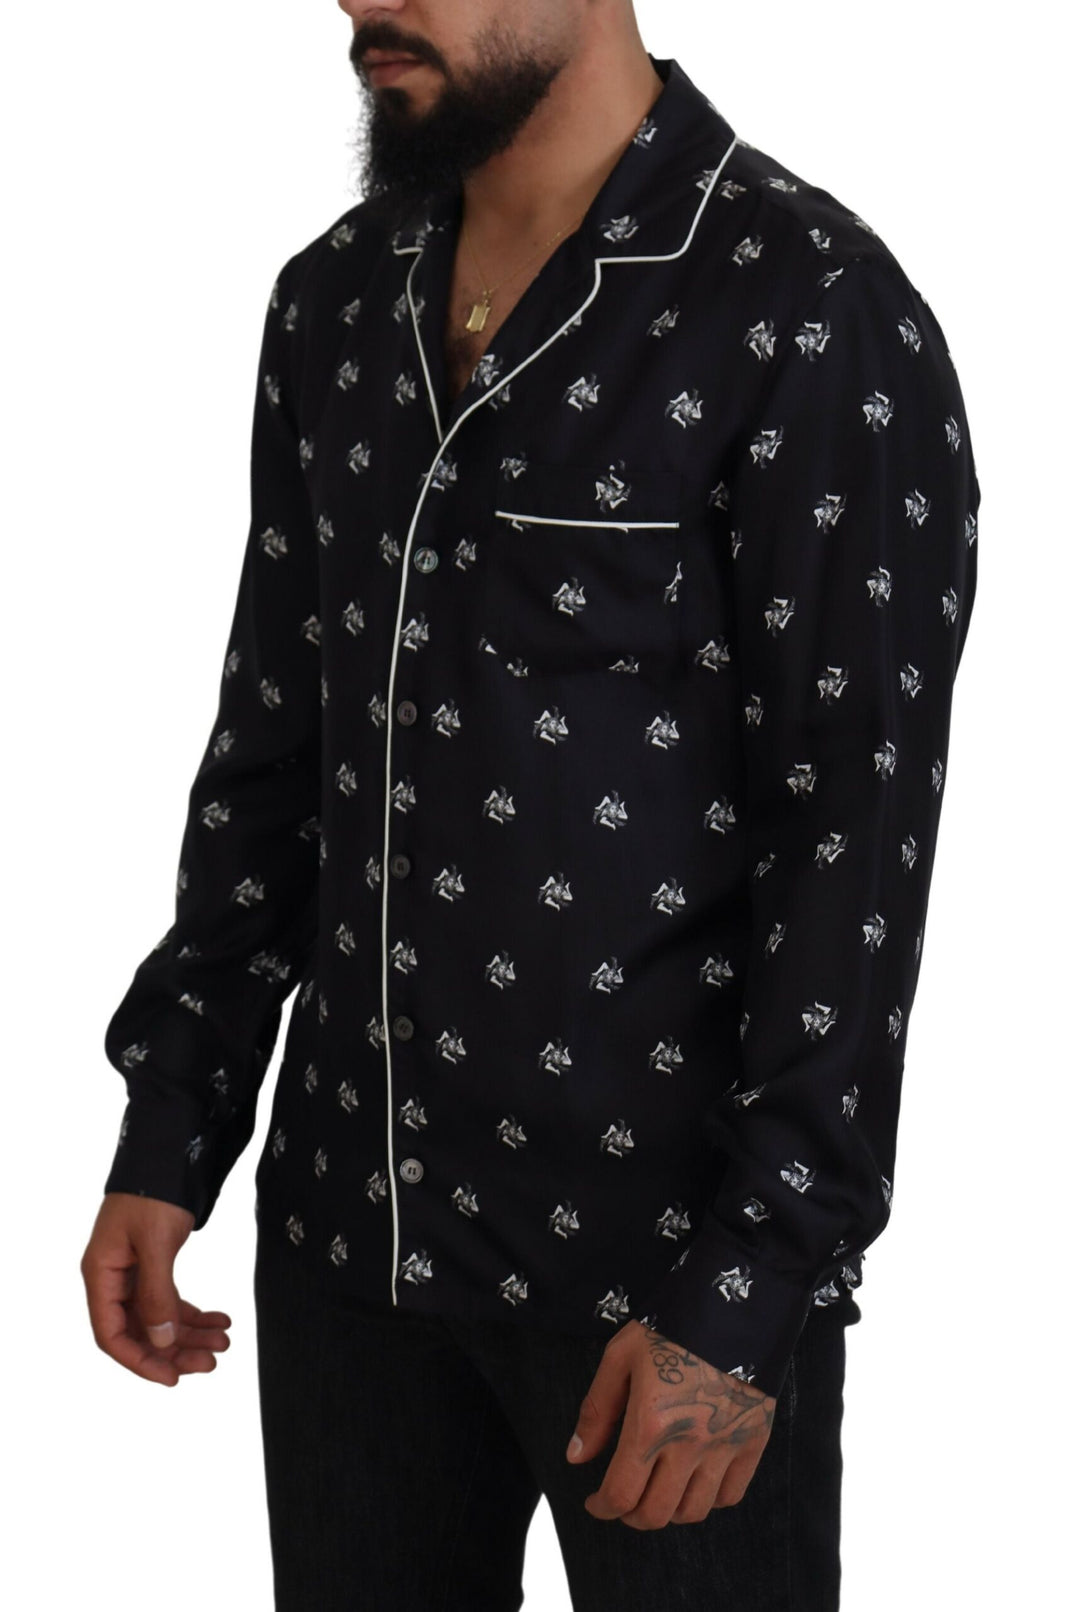 Dolce & Gabbana Black Printed Collared Men Long Sleeve Pajama Top